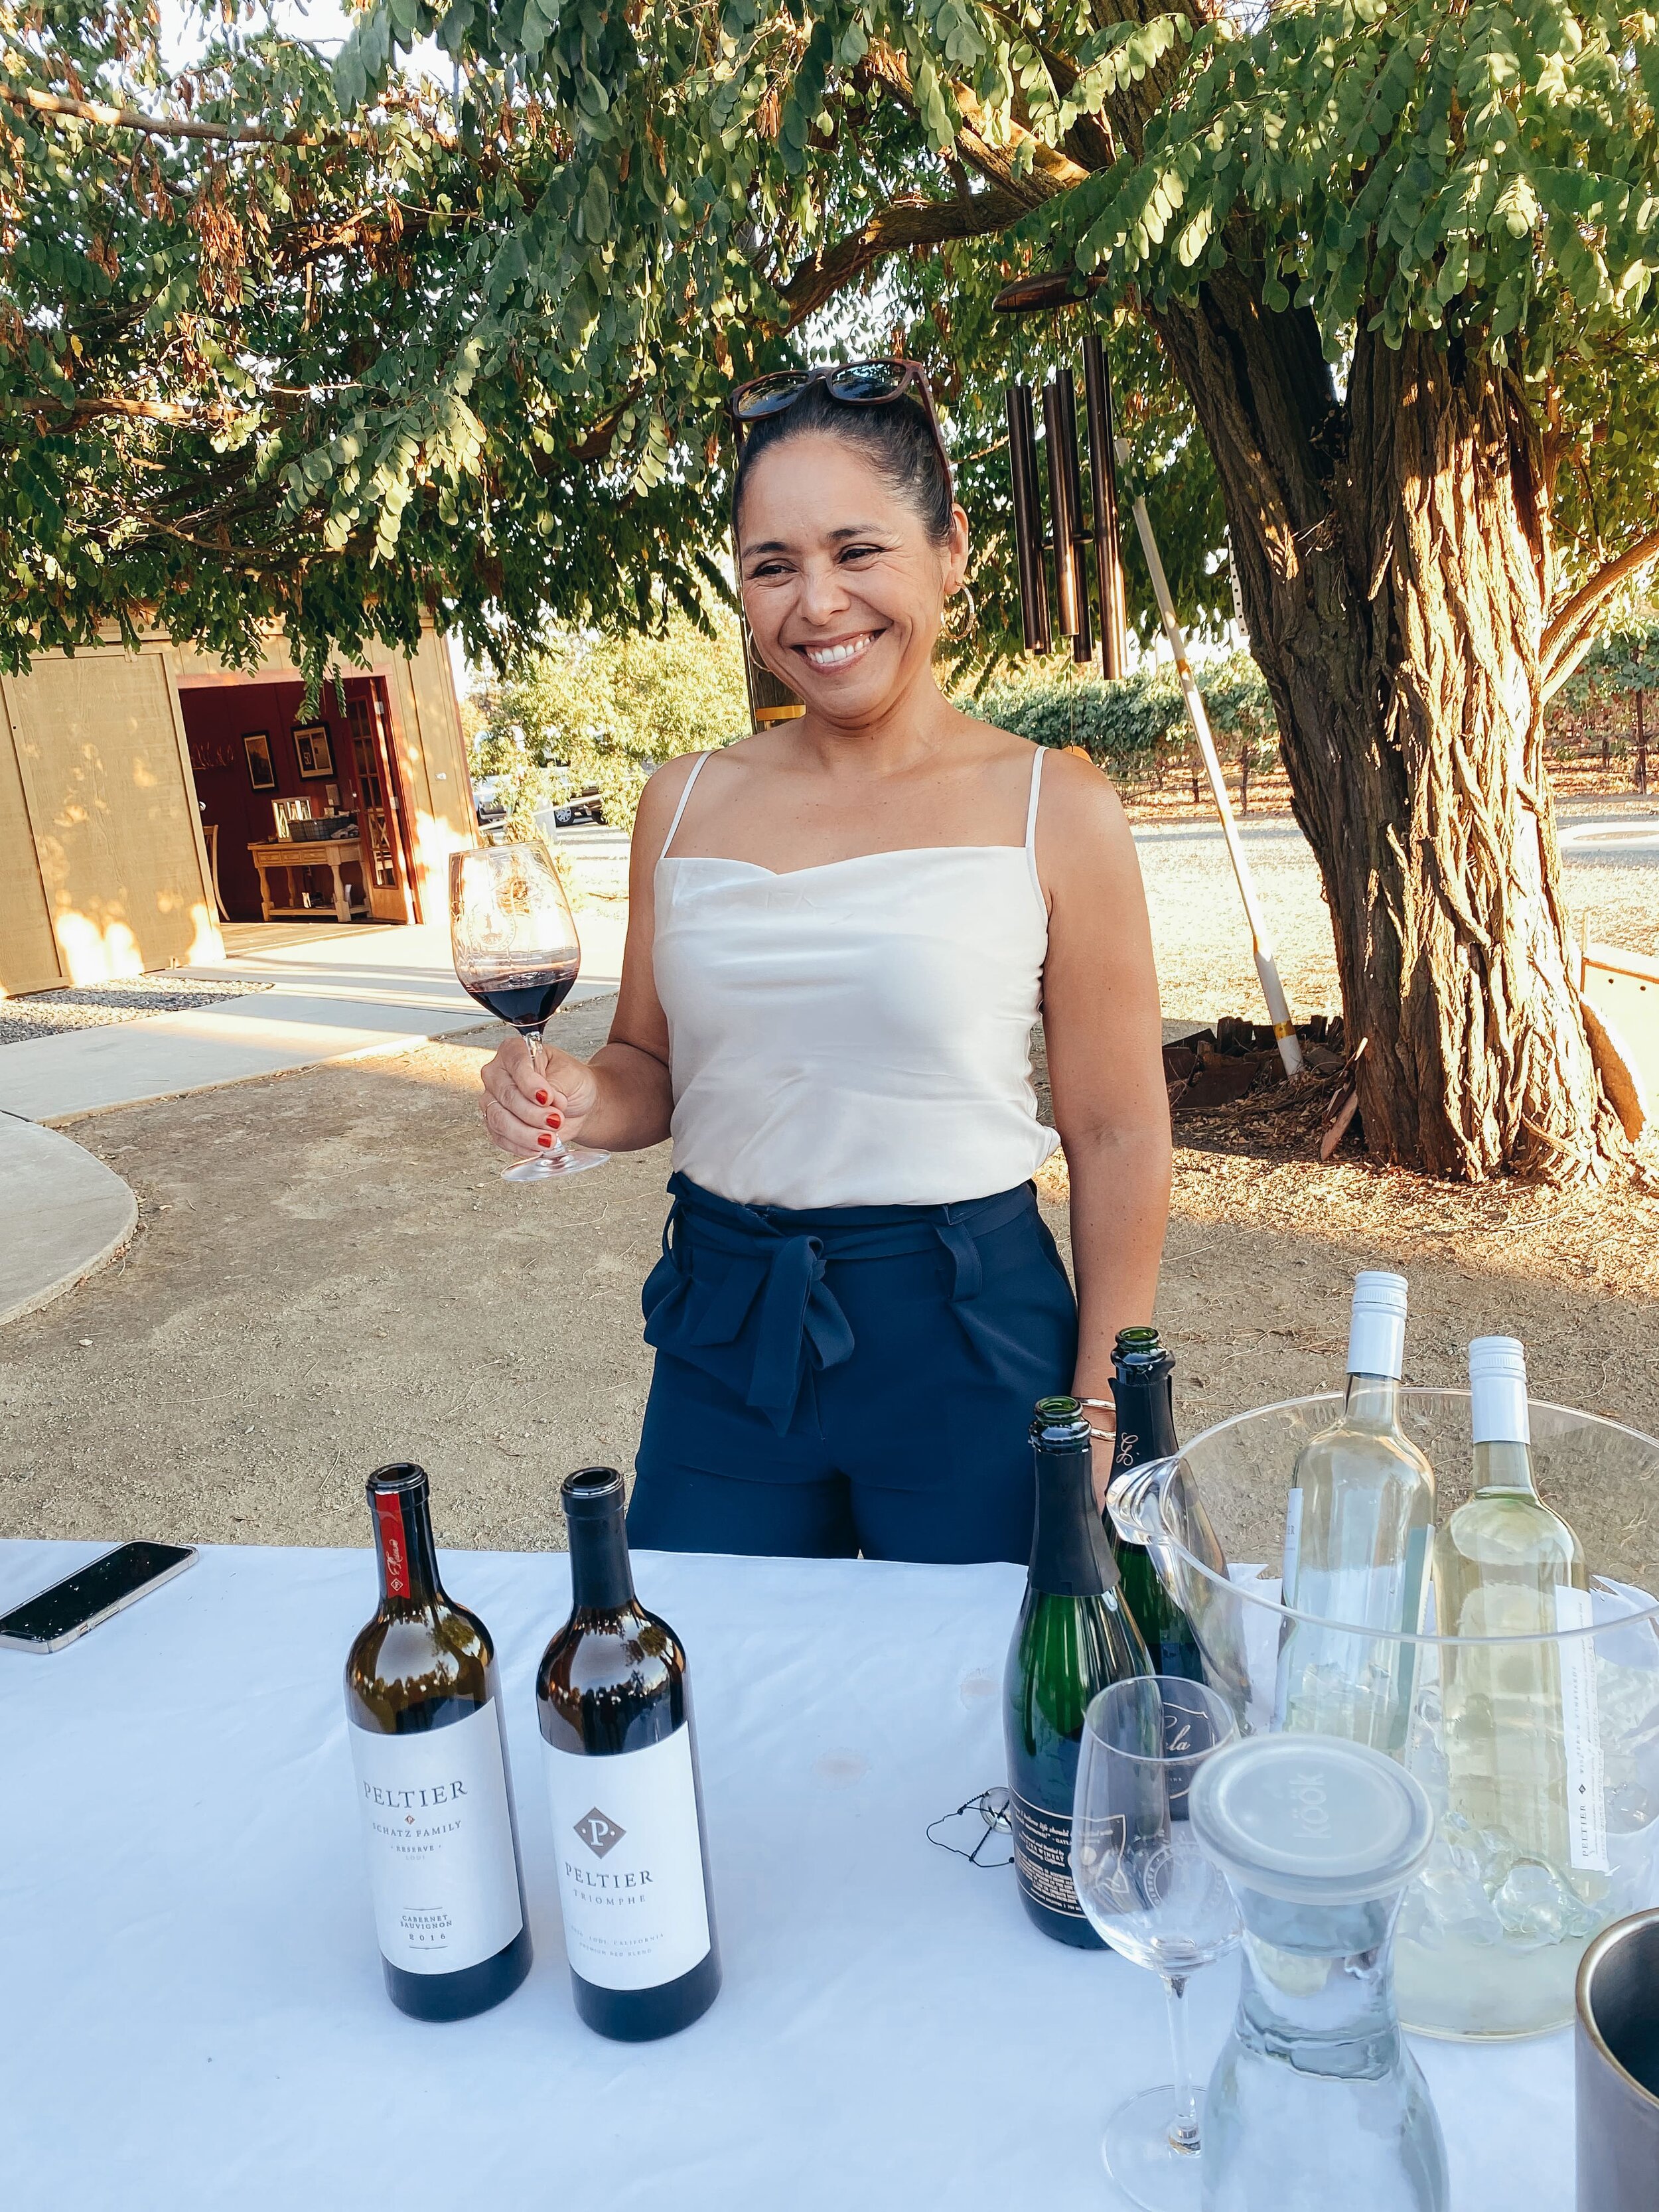 Susy Vasquez, winemaker of Peltier Winery in Lodi, California.